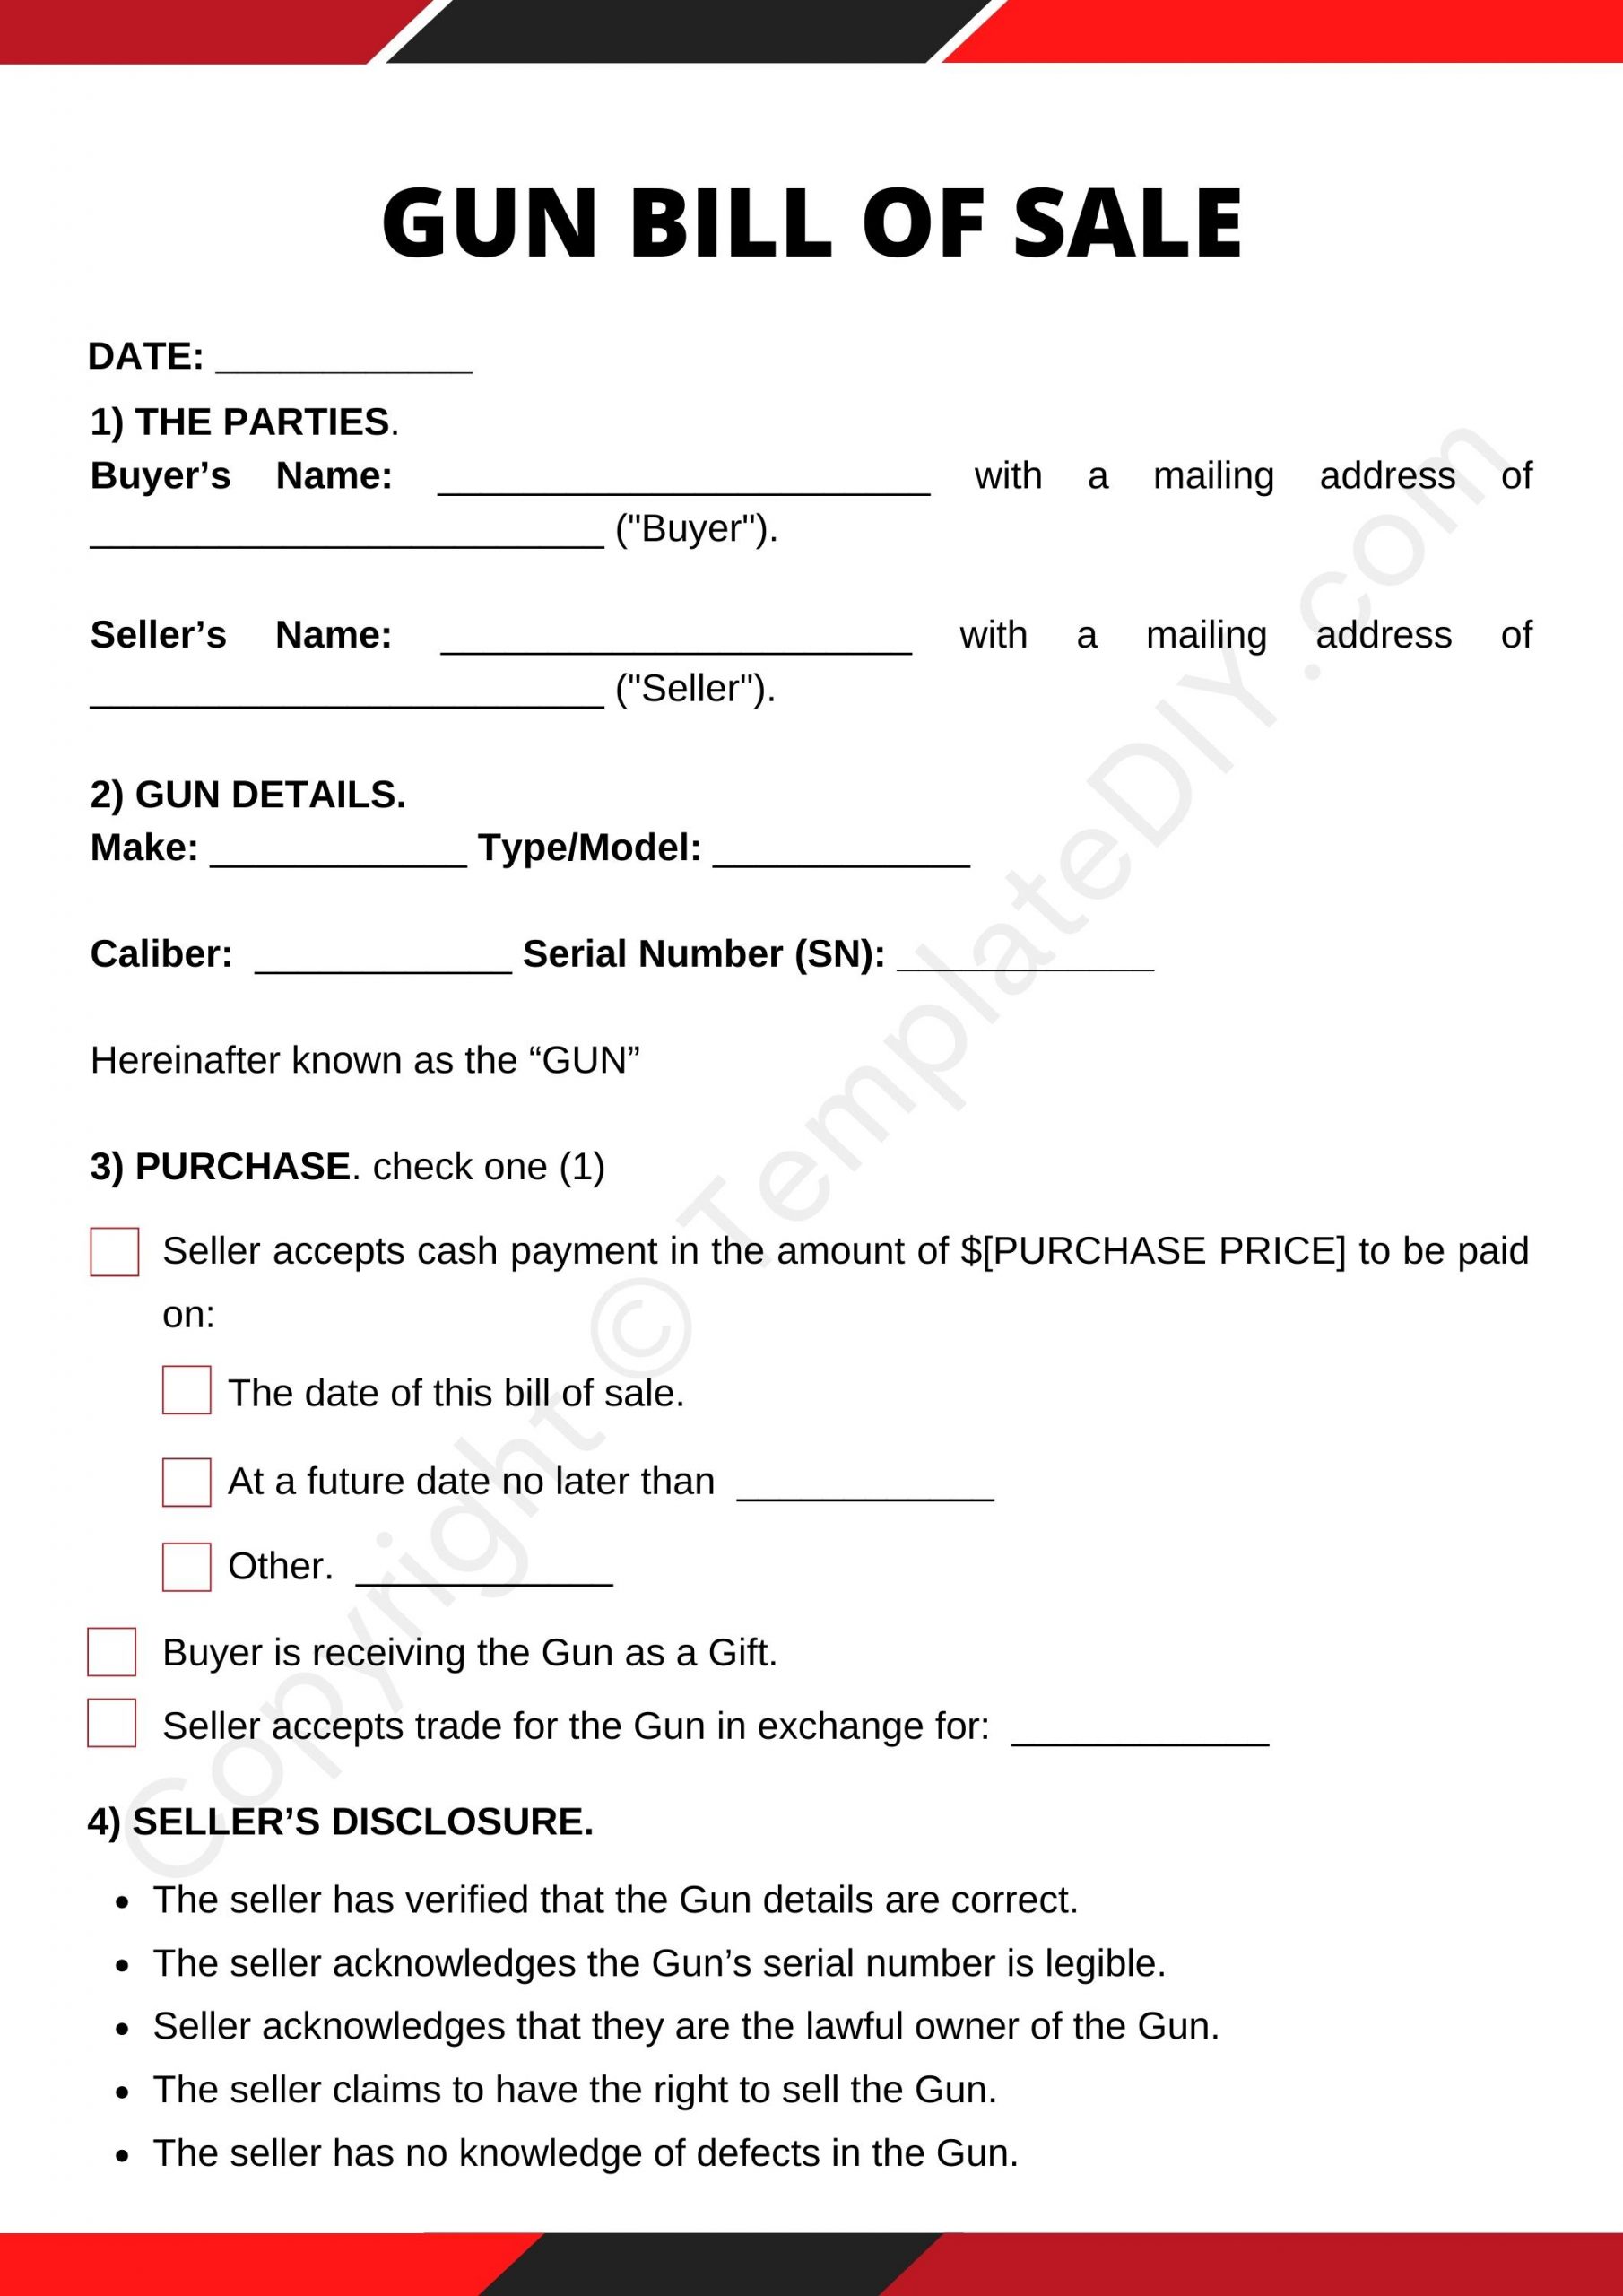 Gun Bill of Sale Blank Printable Form Template in PDF & Word